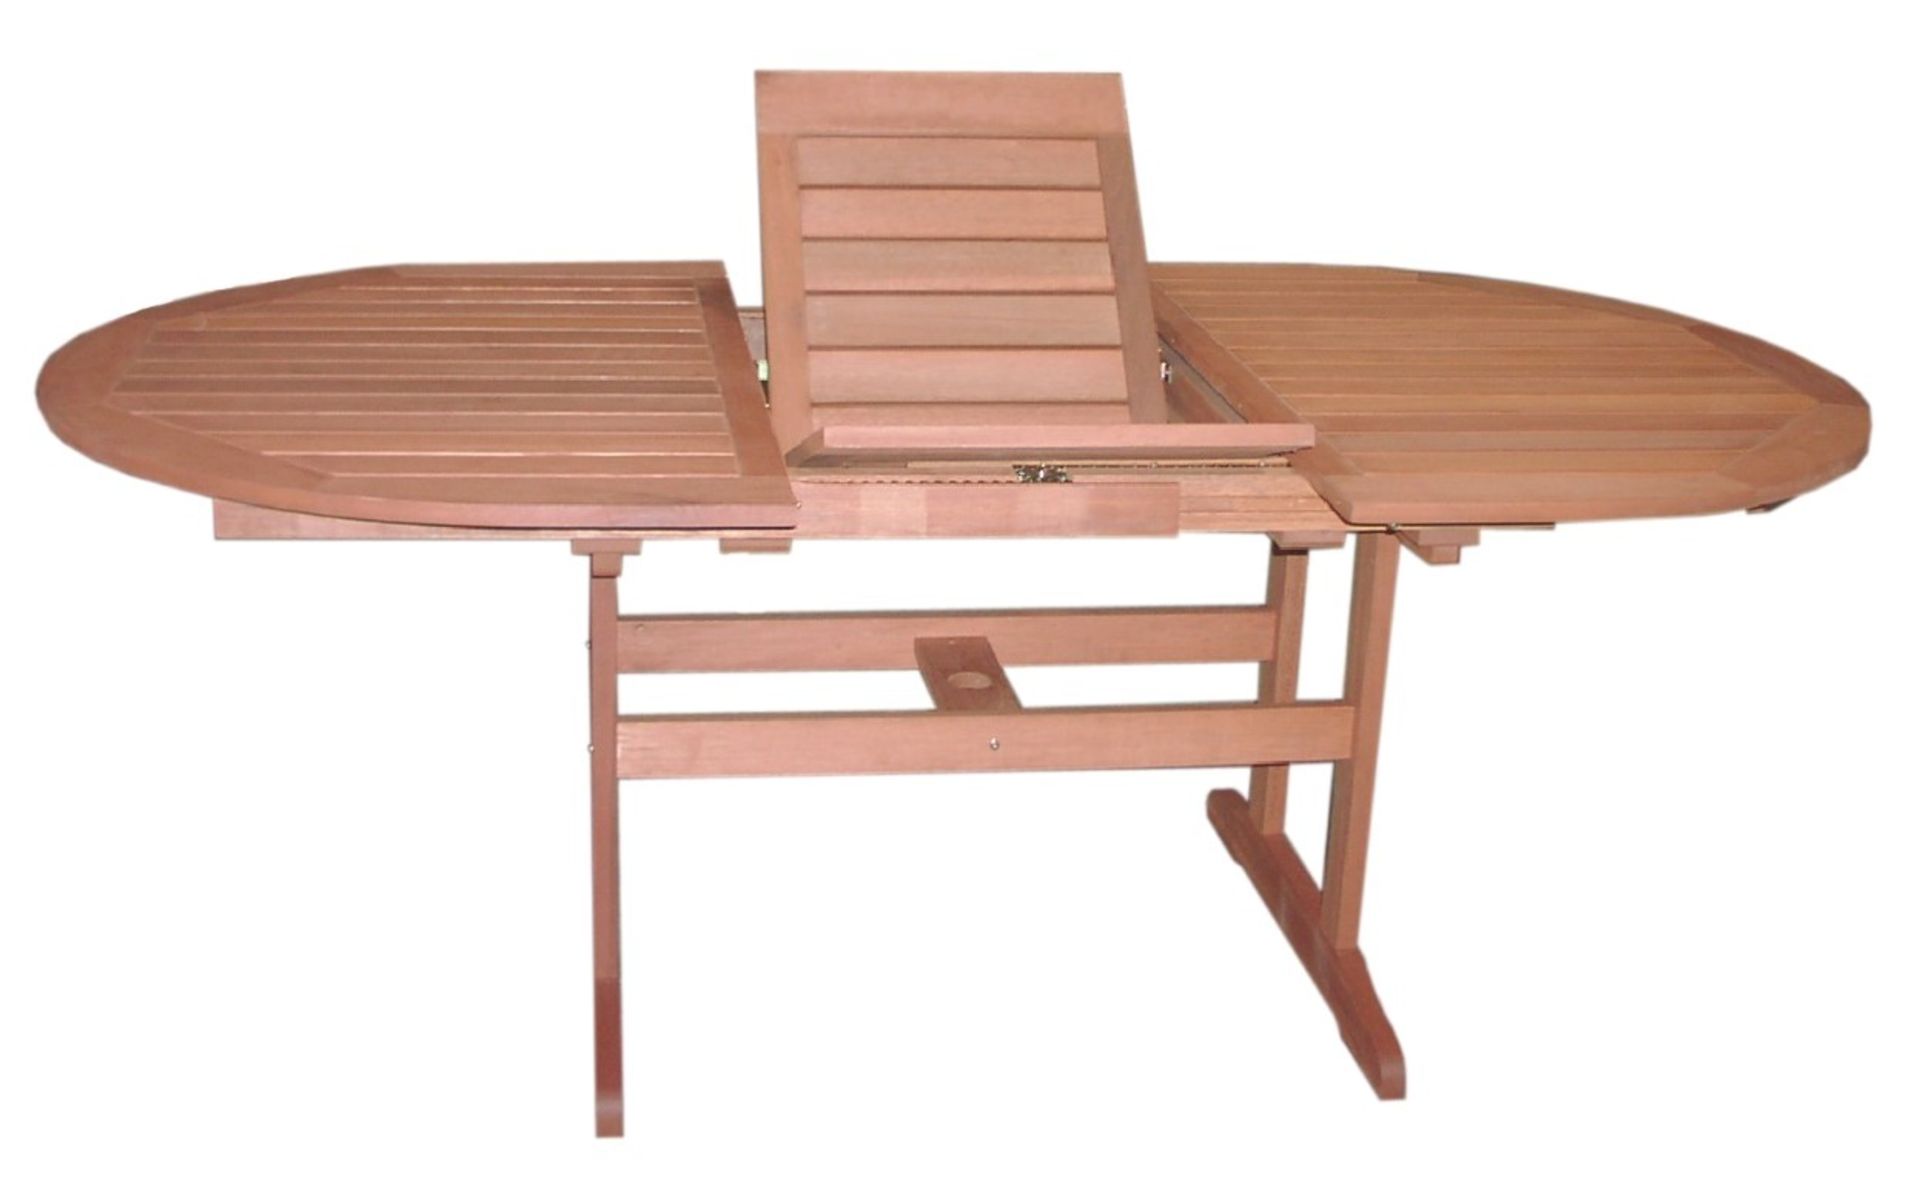 1 x 5-Piece "Macau Nassau" Garden Furniture Set - Includes Bench, Extending Table & 3 x Arm Chairs - - Image 7 of 8